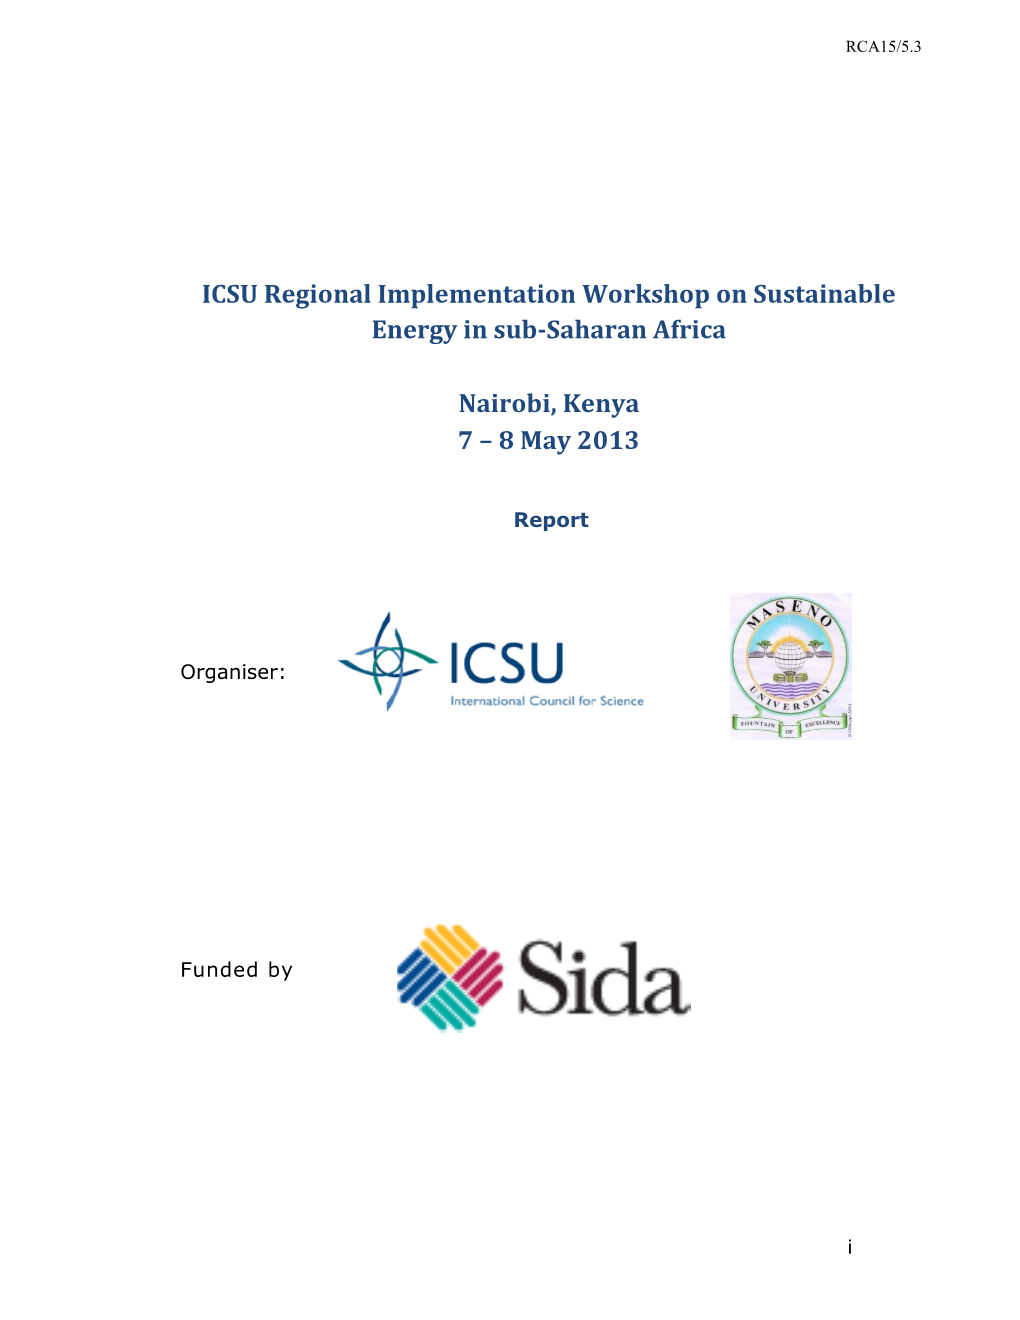 ICSU Regional Implementation Workshop on Sustainable Energy in Sub-Saharan Africa